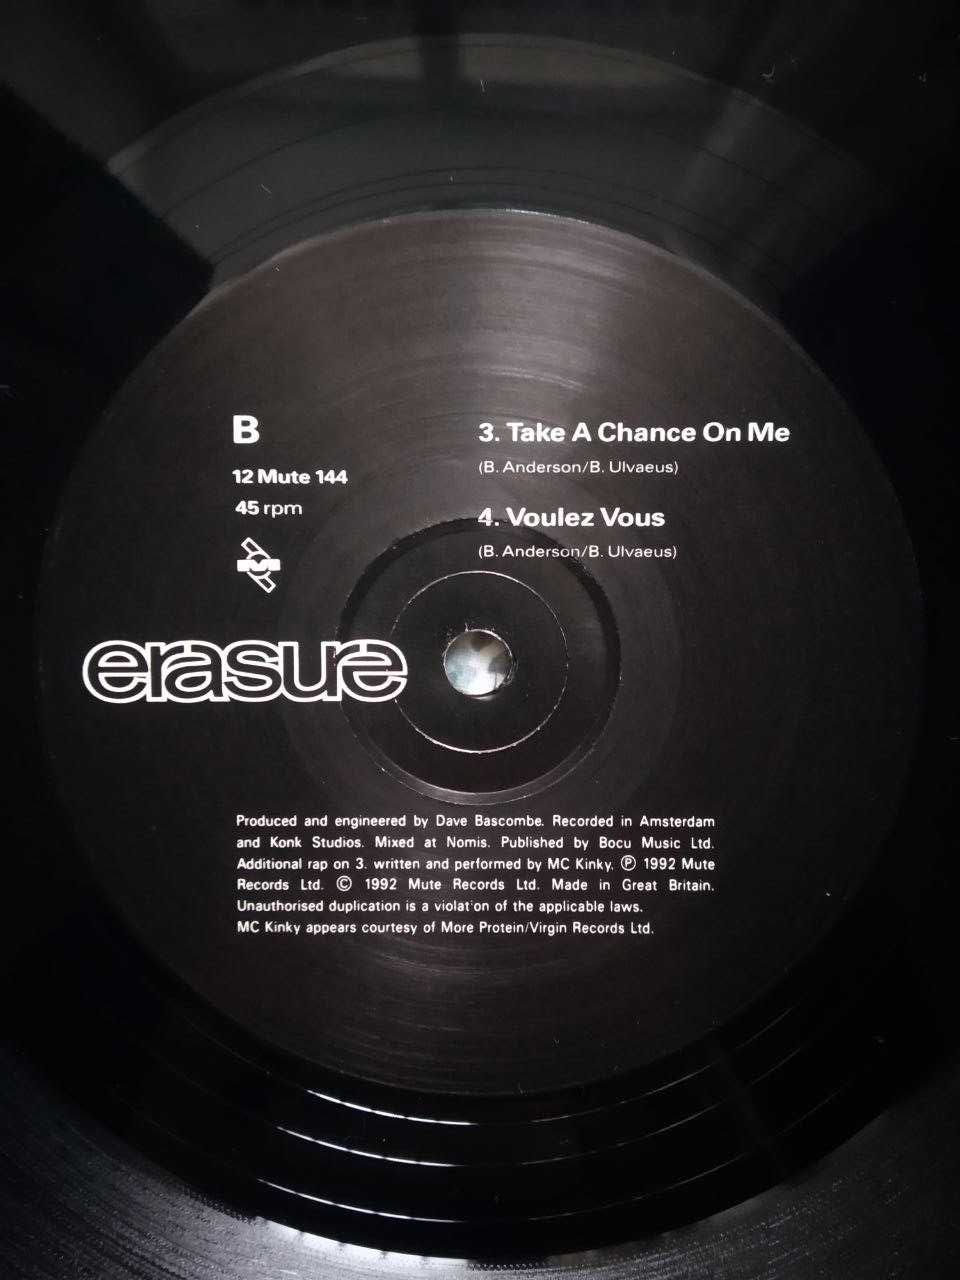 Erasure - Abba-esque (UK, 45 RPM)